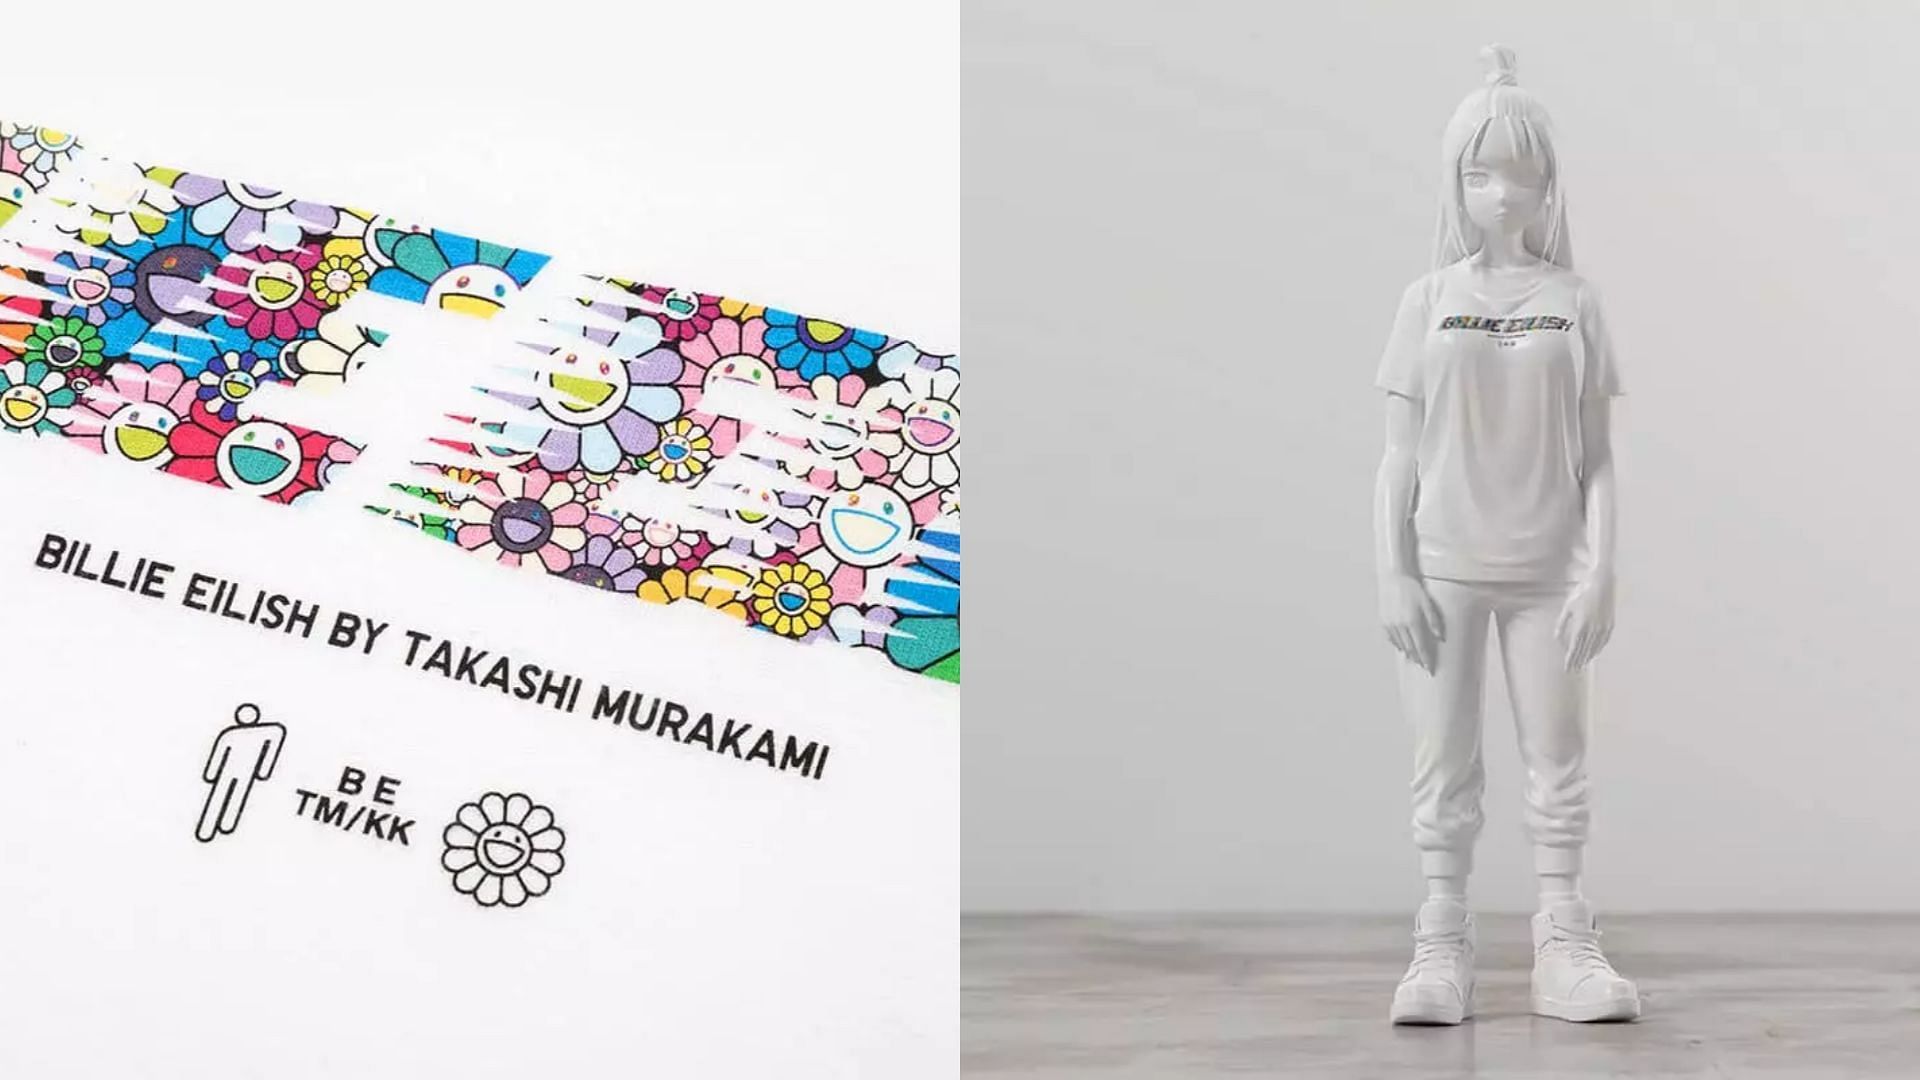 Uniqlo Launches Billie Eilish x Takashi Murakami Capsule Collection